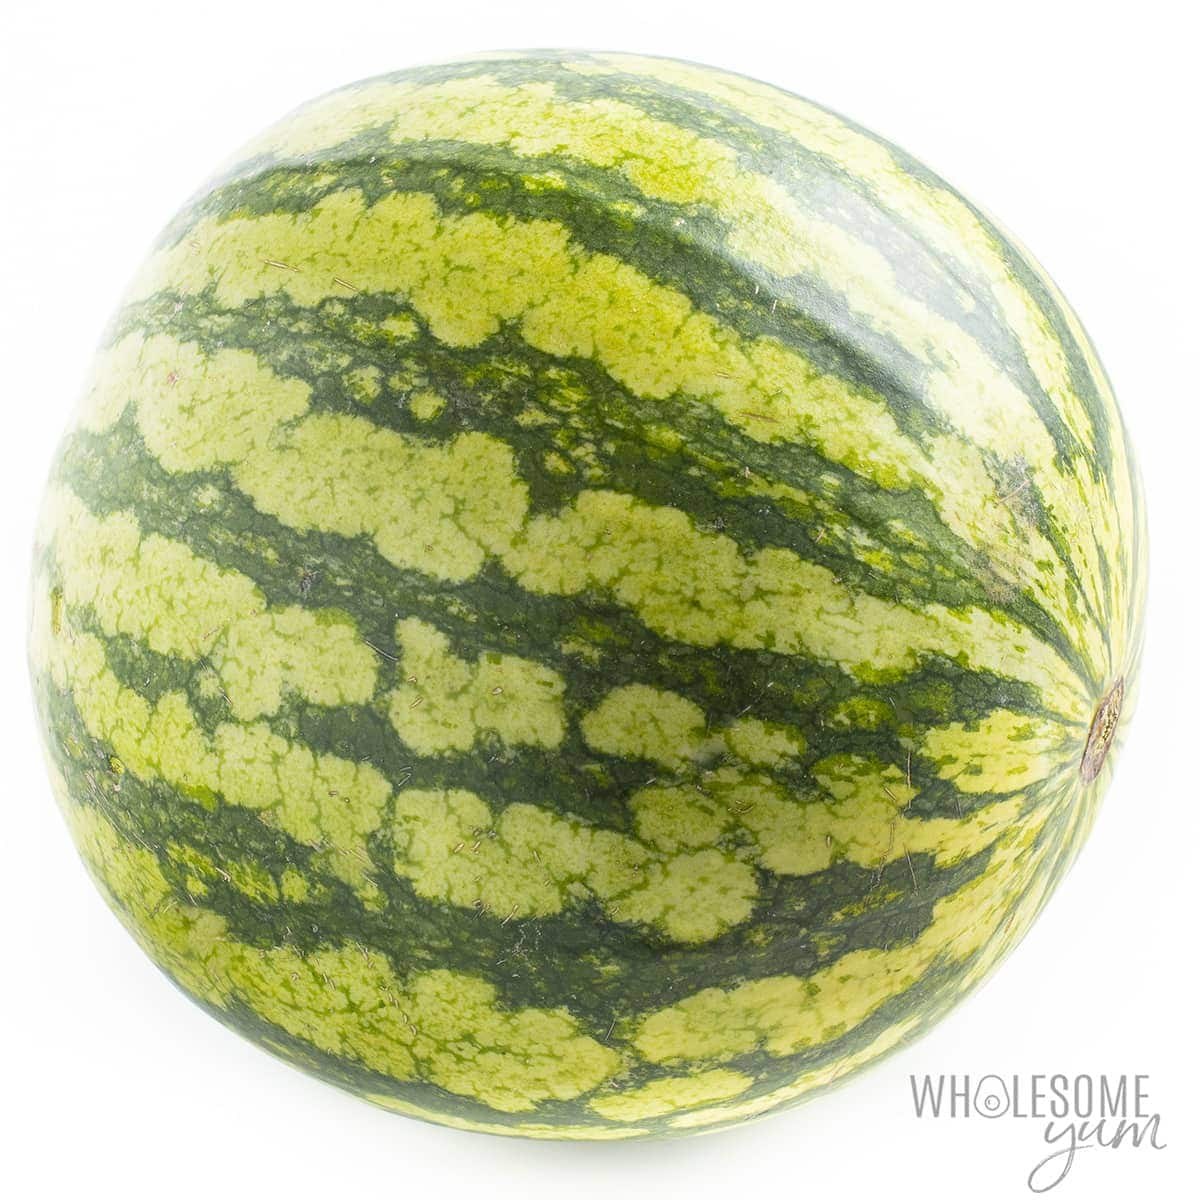 Single whole watermelon